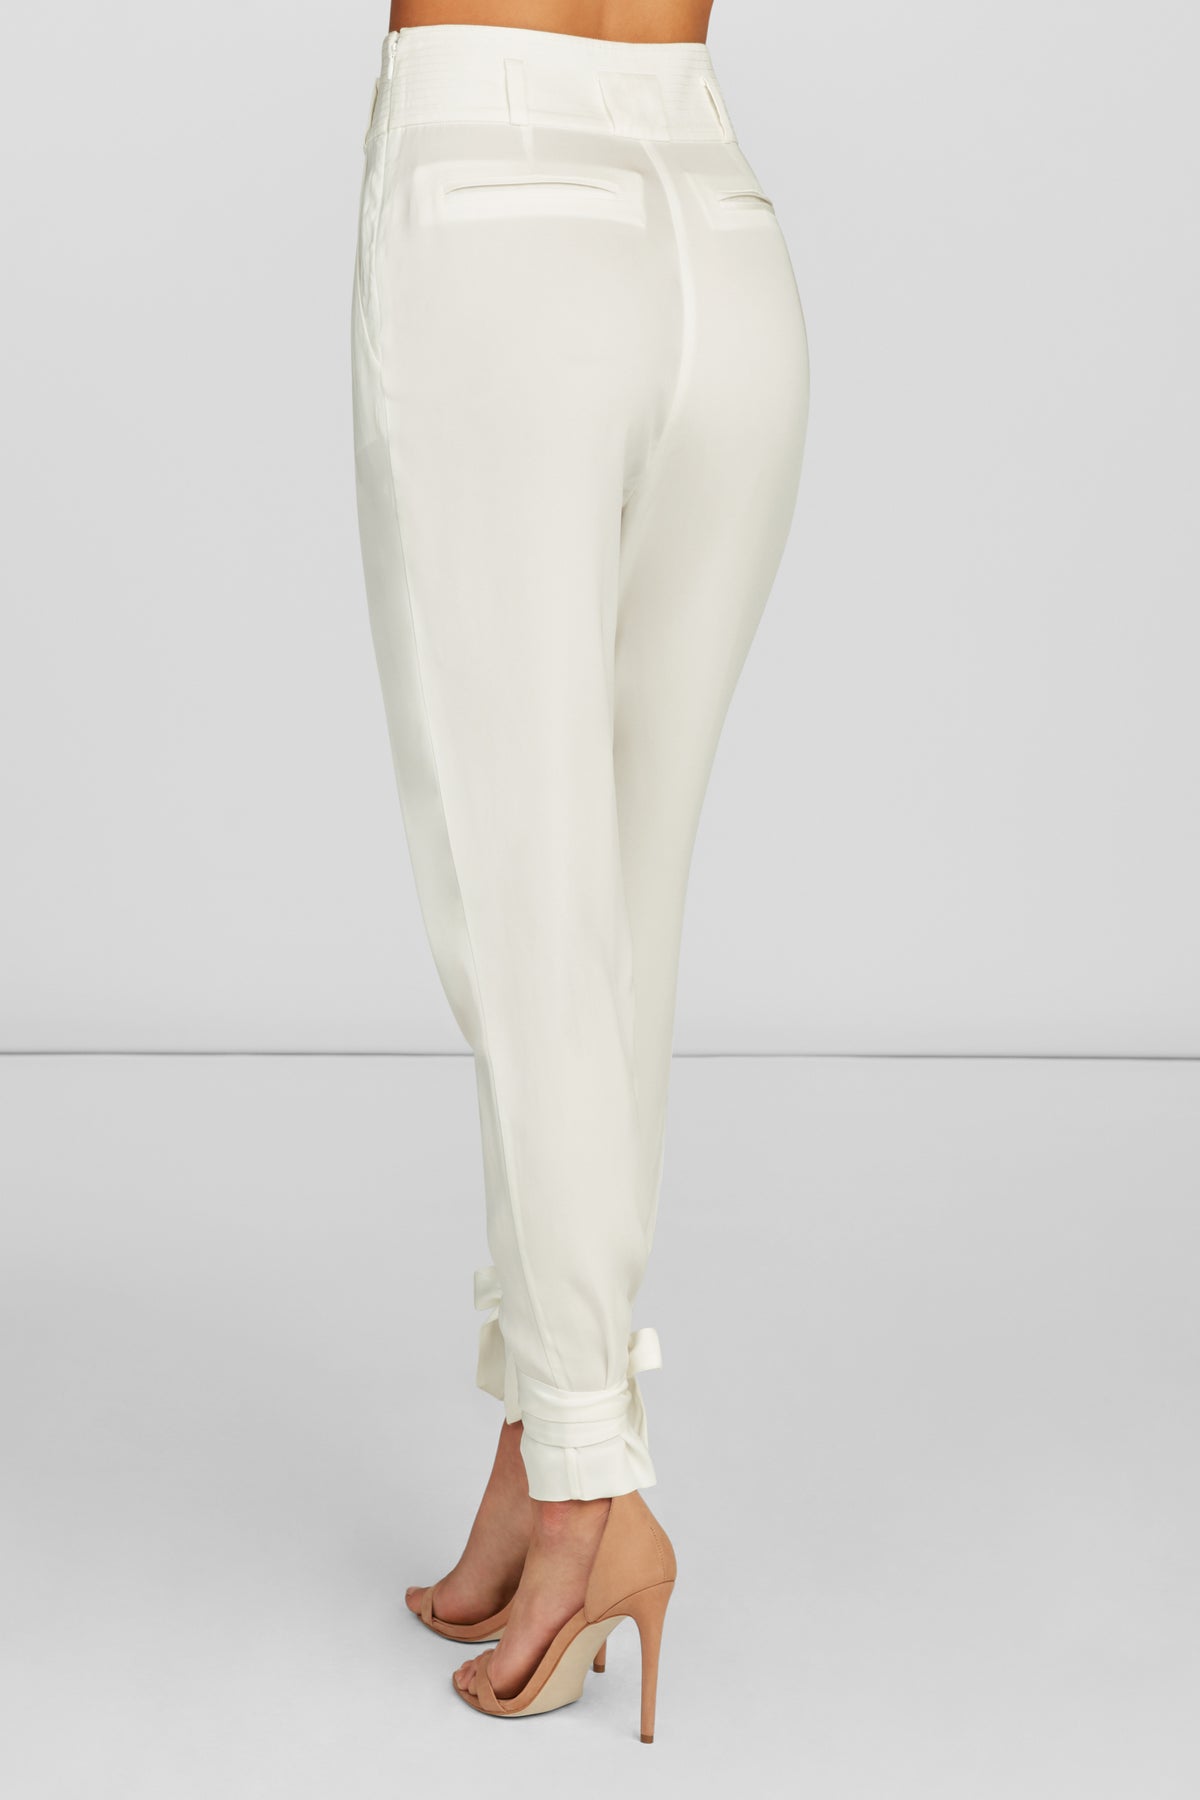 Aria High Waisted Skinny Pants in White